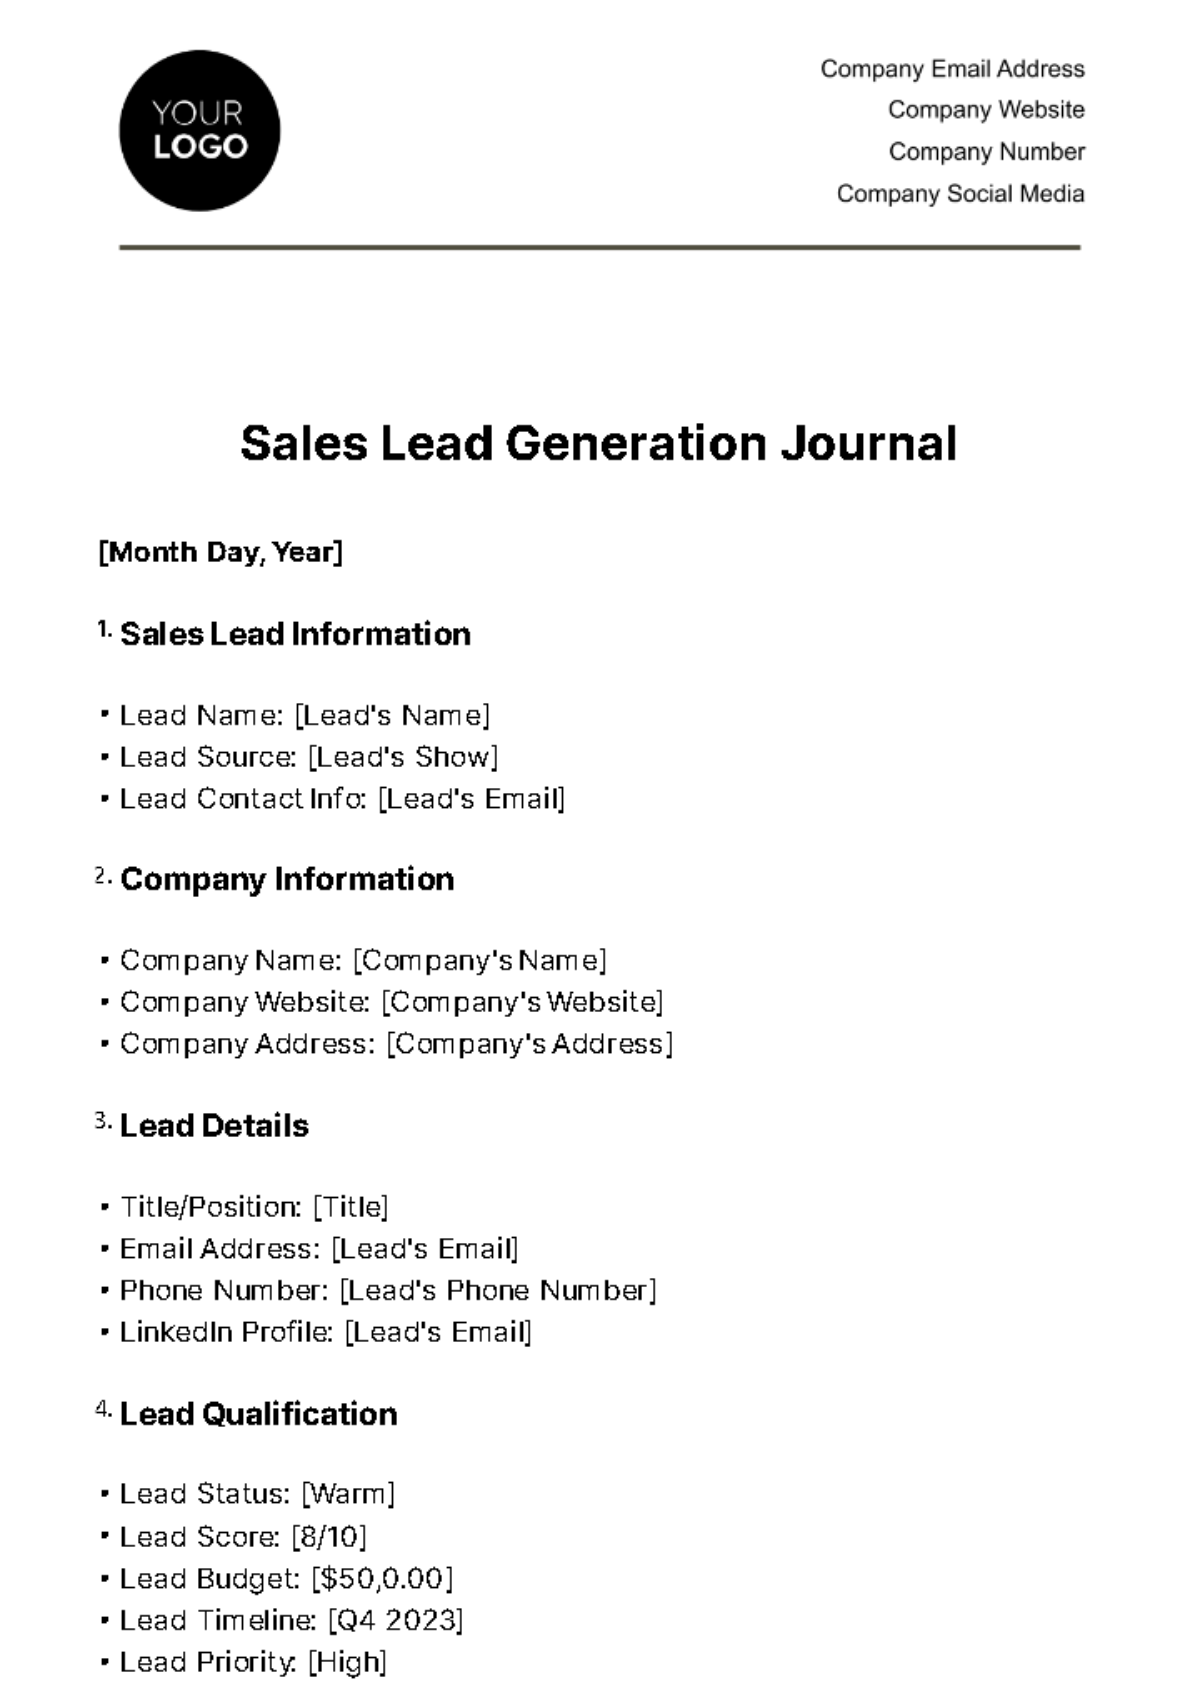 Sales Lead Generation Journal Template